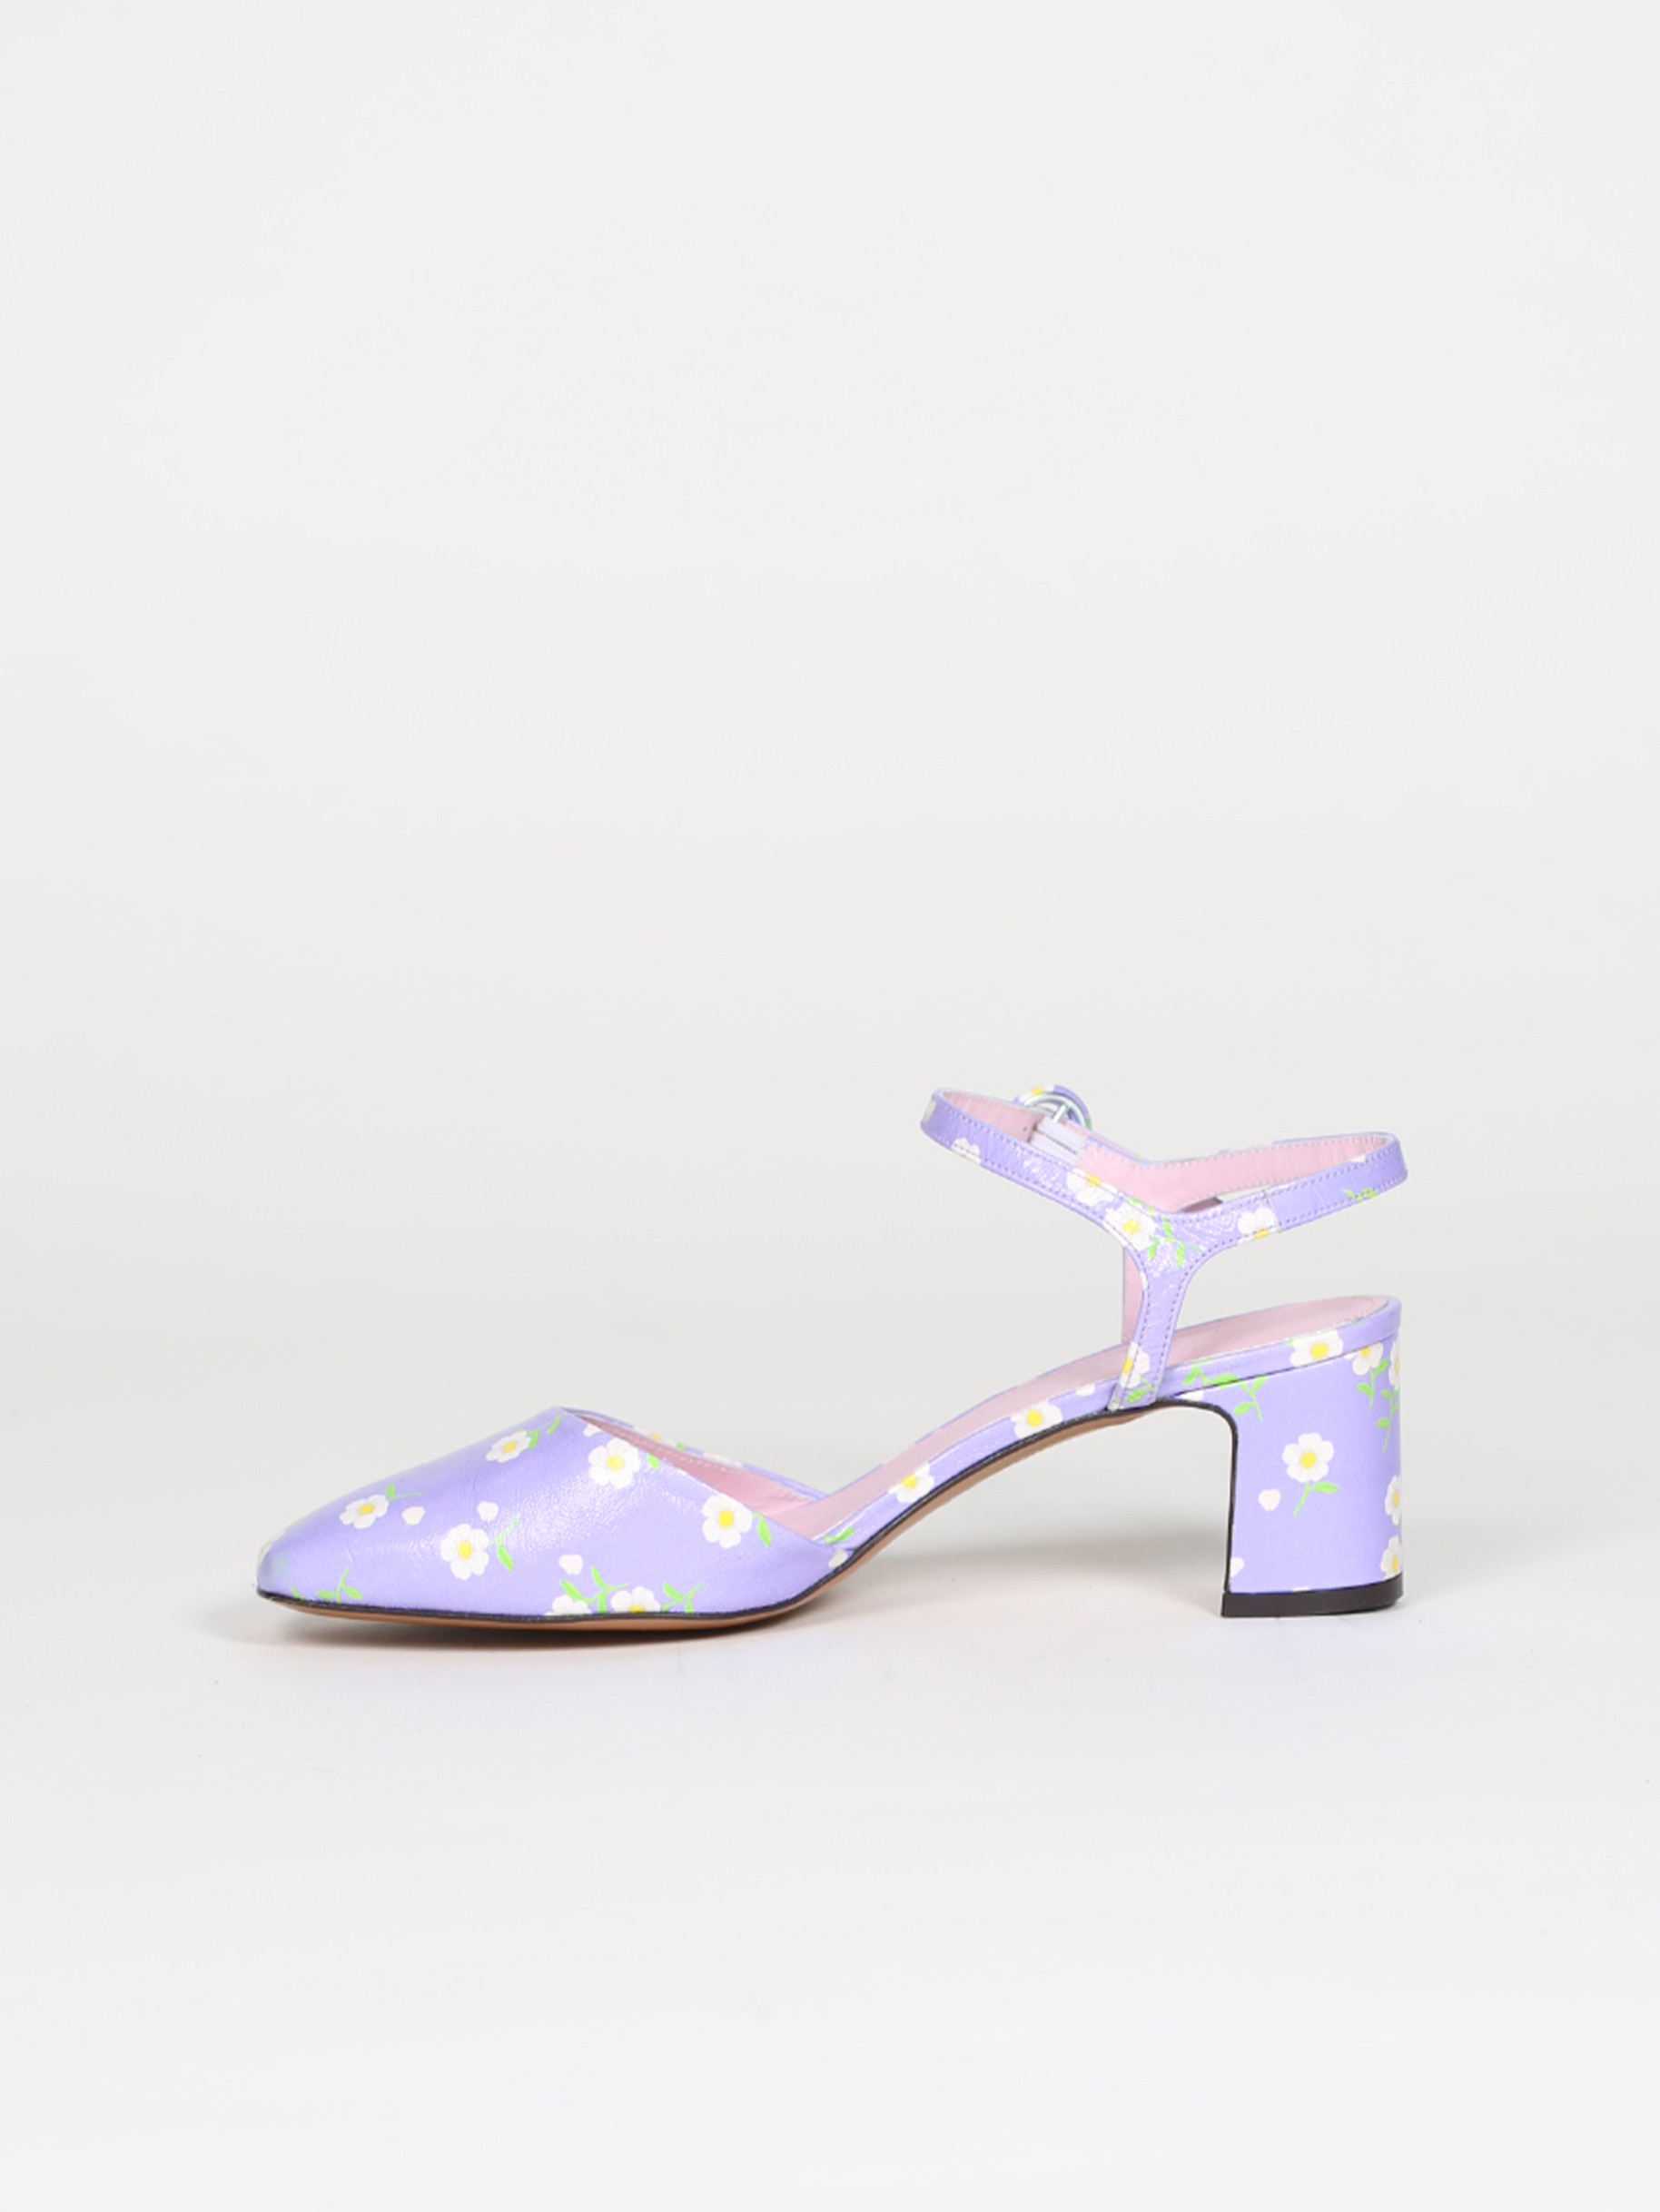 SORAYA lilac printed flowers leather sandals| Carel Paris Shoes